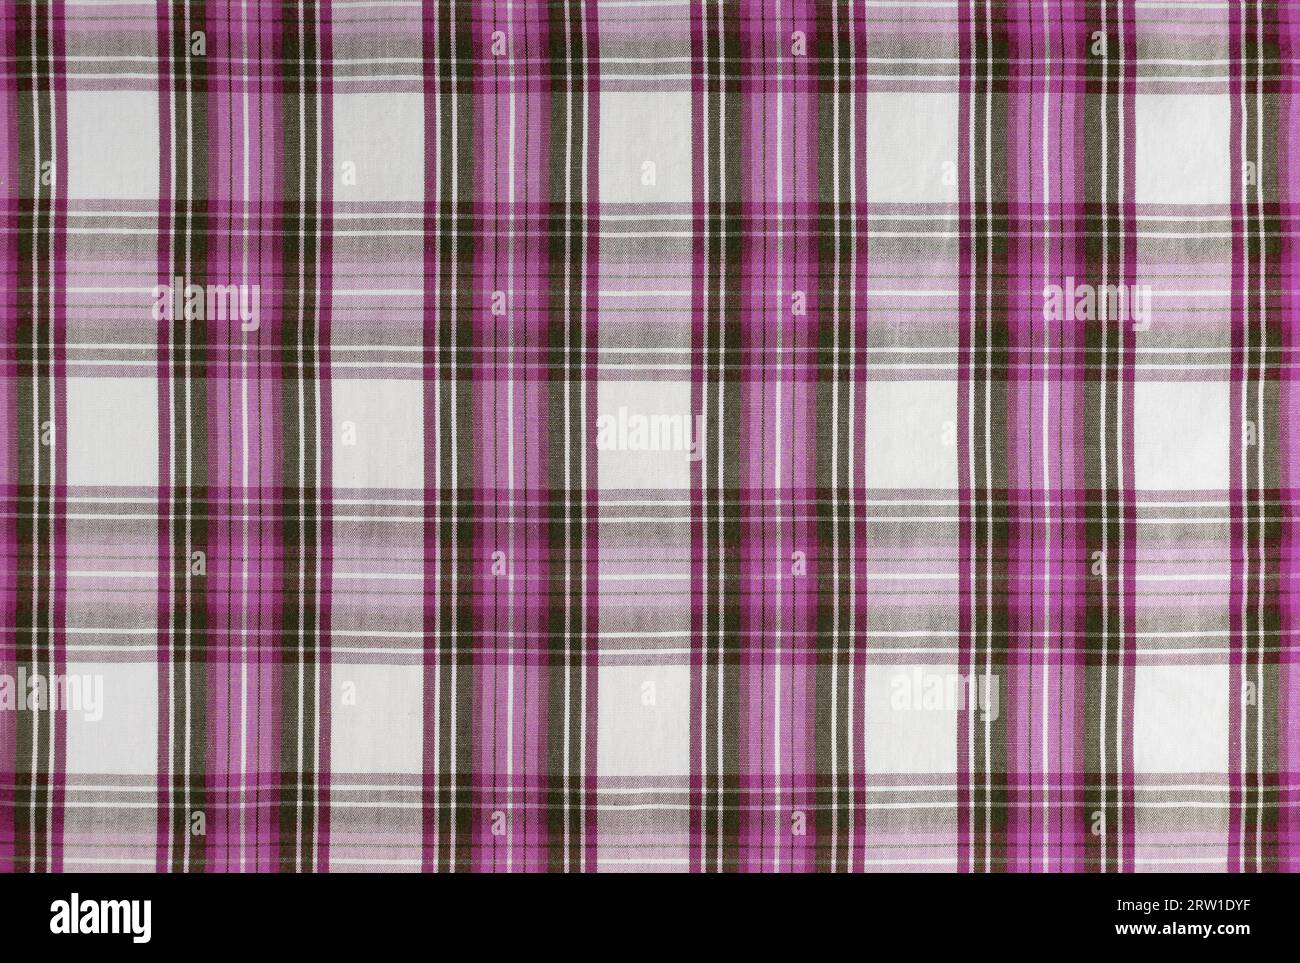 Pink checkered texture fabric, tartan pattern. Shirt fabric, tablecloth textile, linen plaid cloth, classic scottish check pattern. Backdrop, wallpape Stock Photo